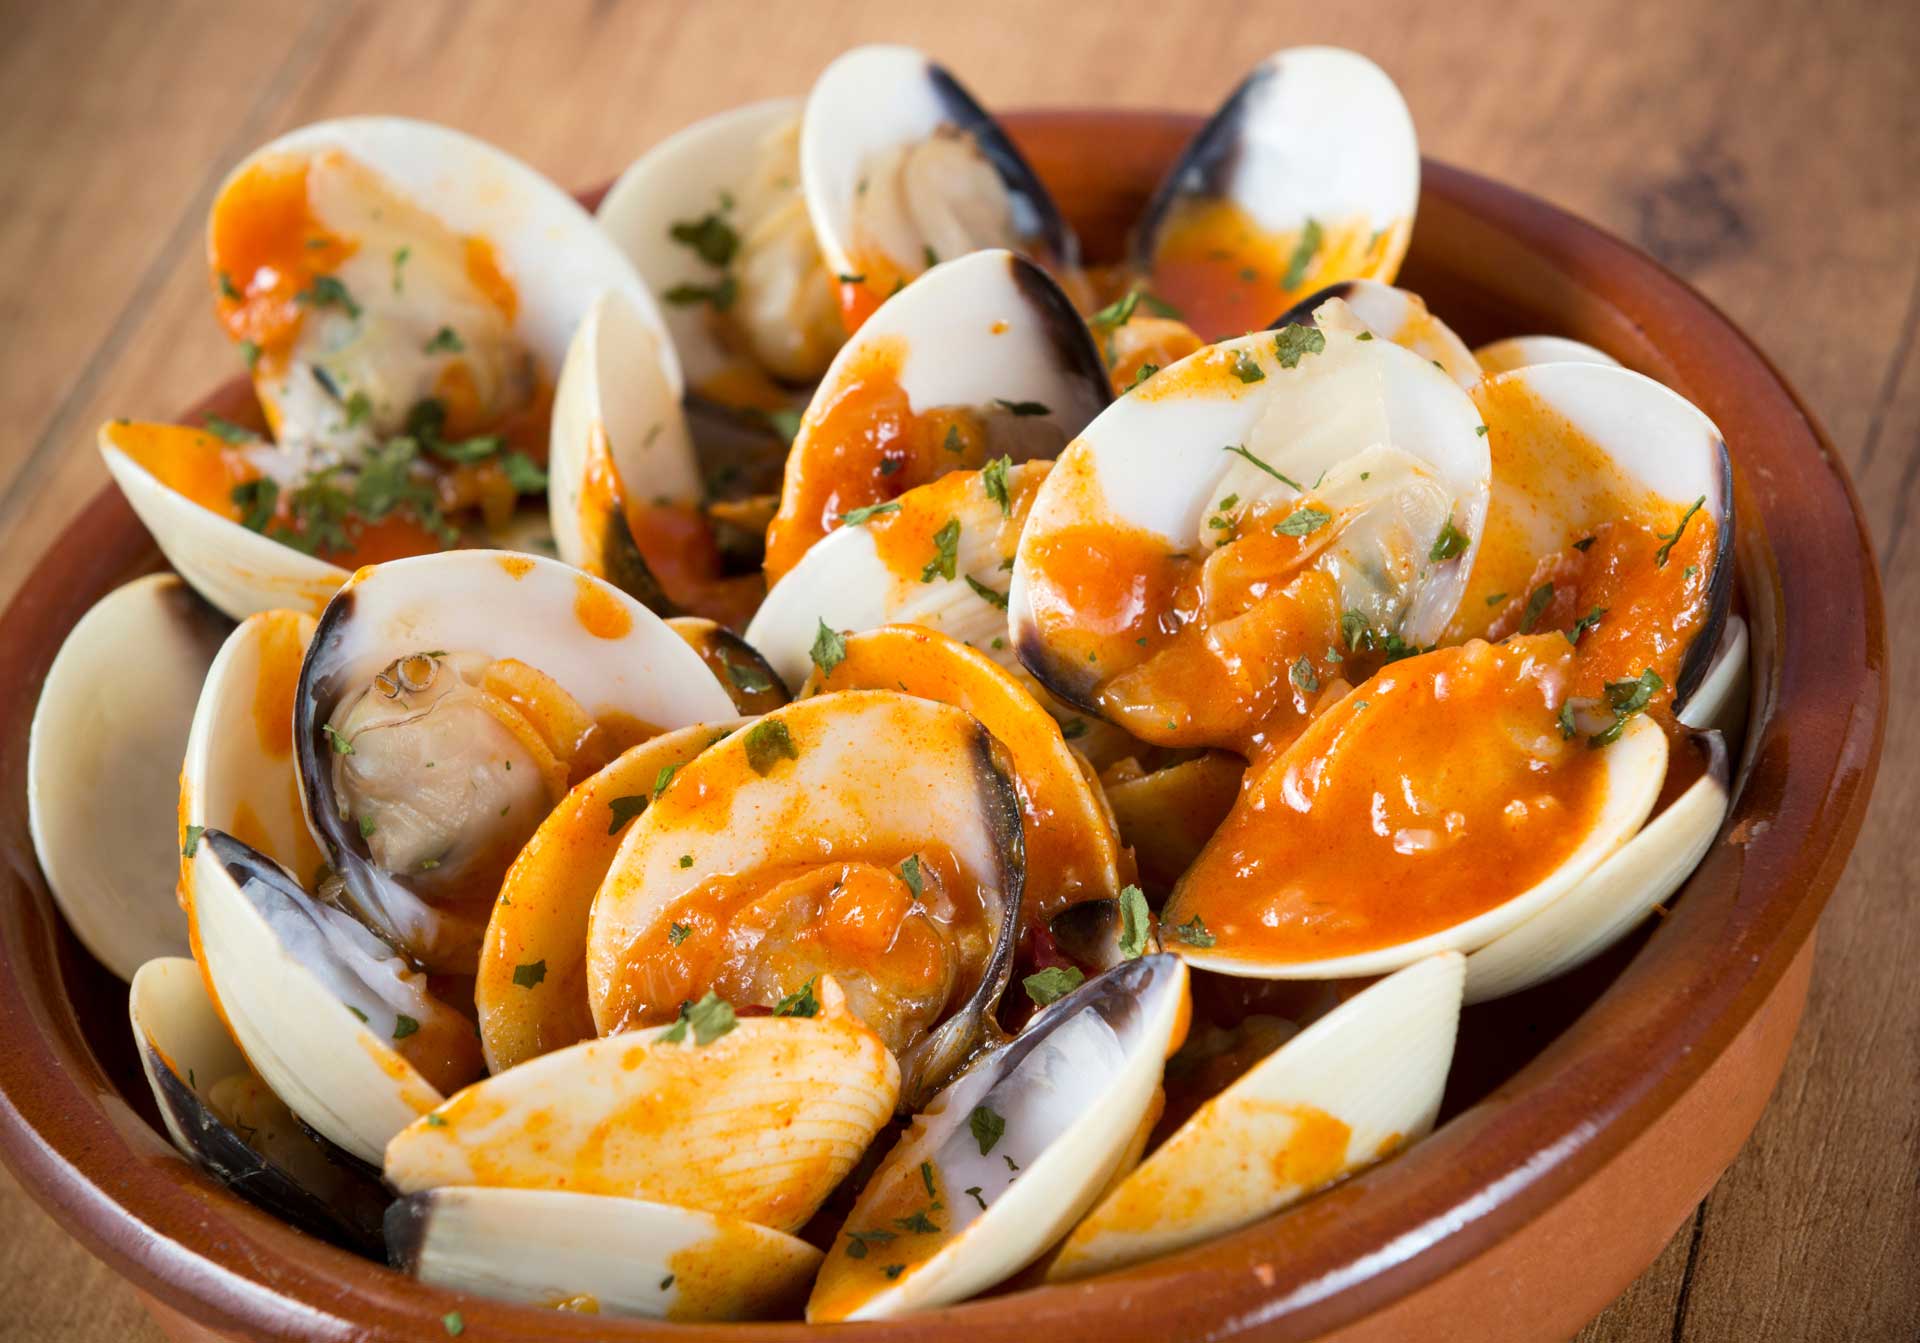 Recipe of clams in marinara style